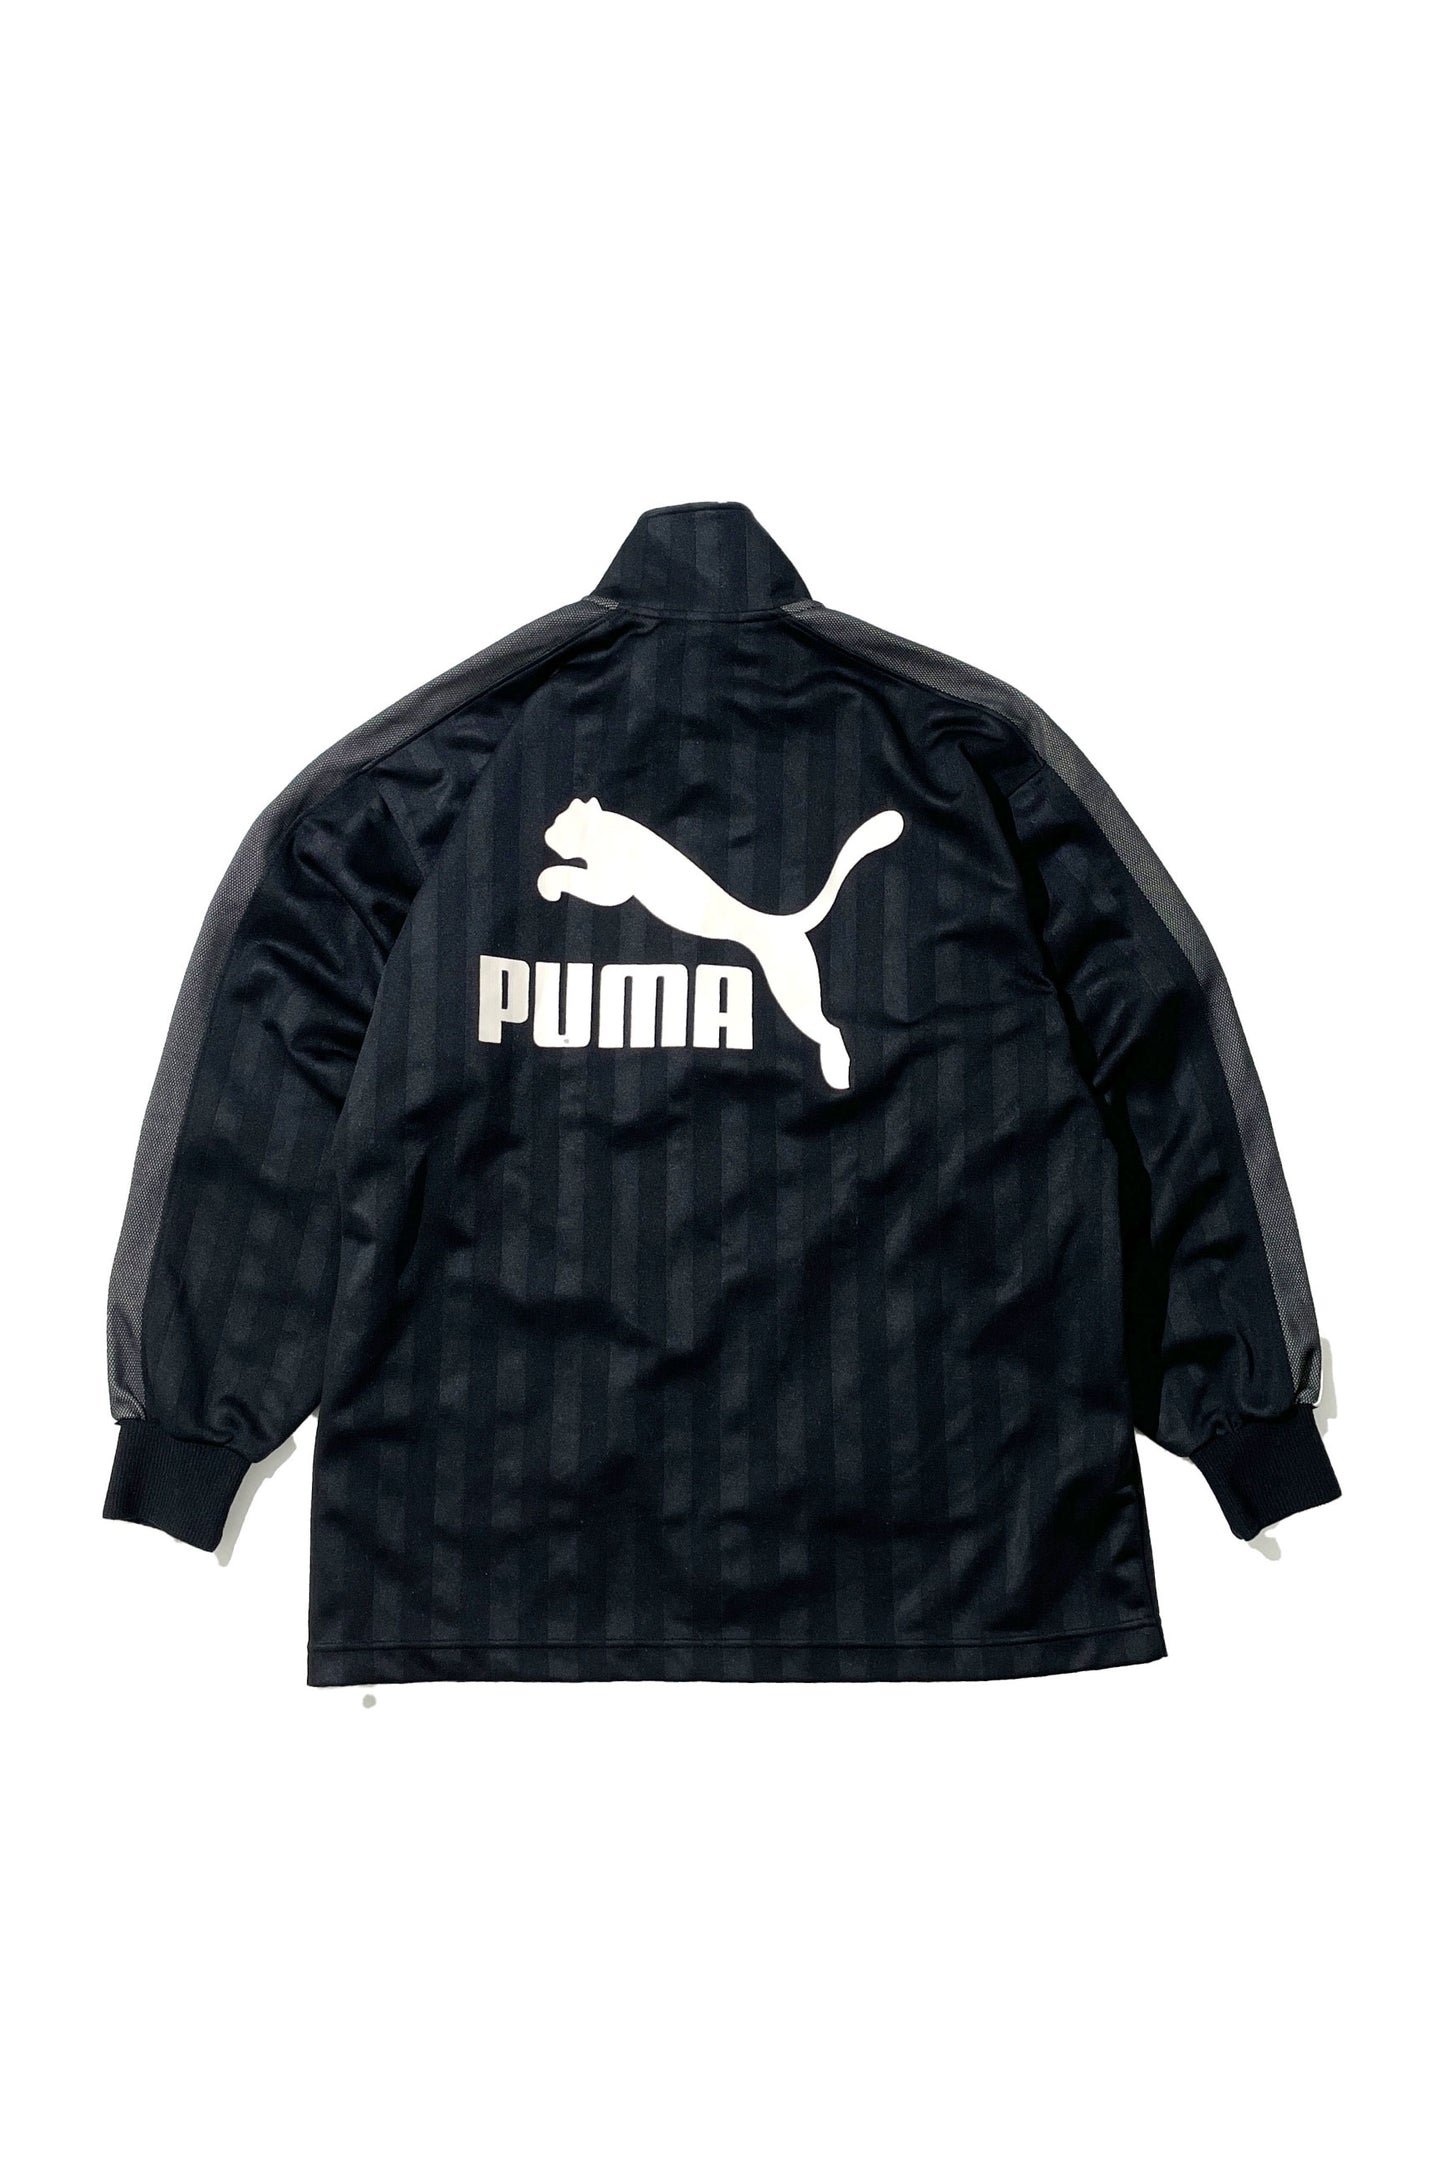 90's PUMA track jacket